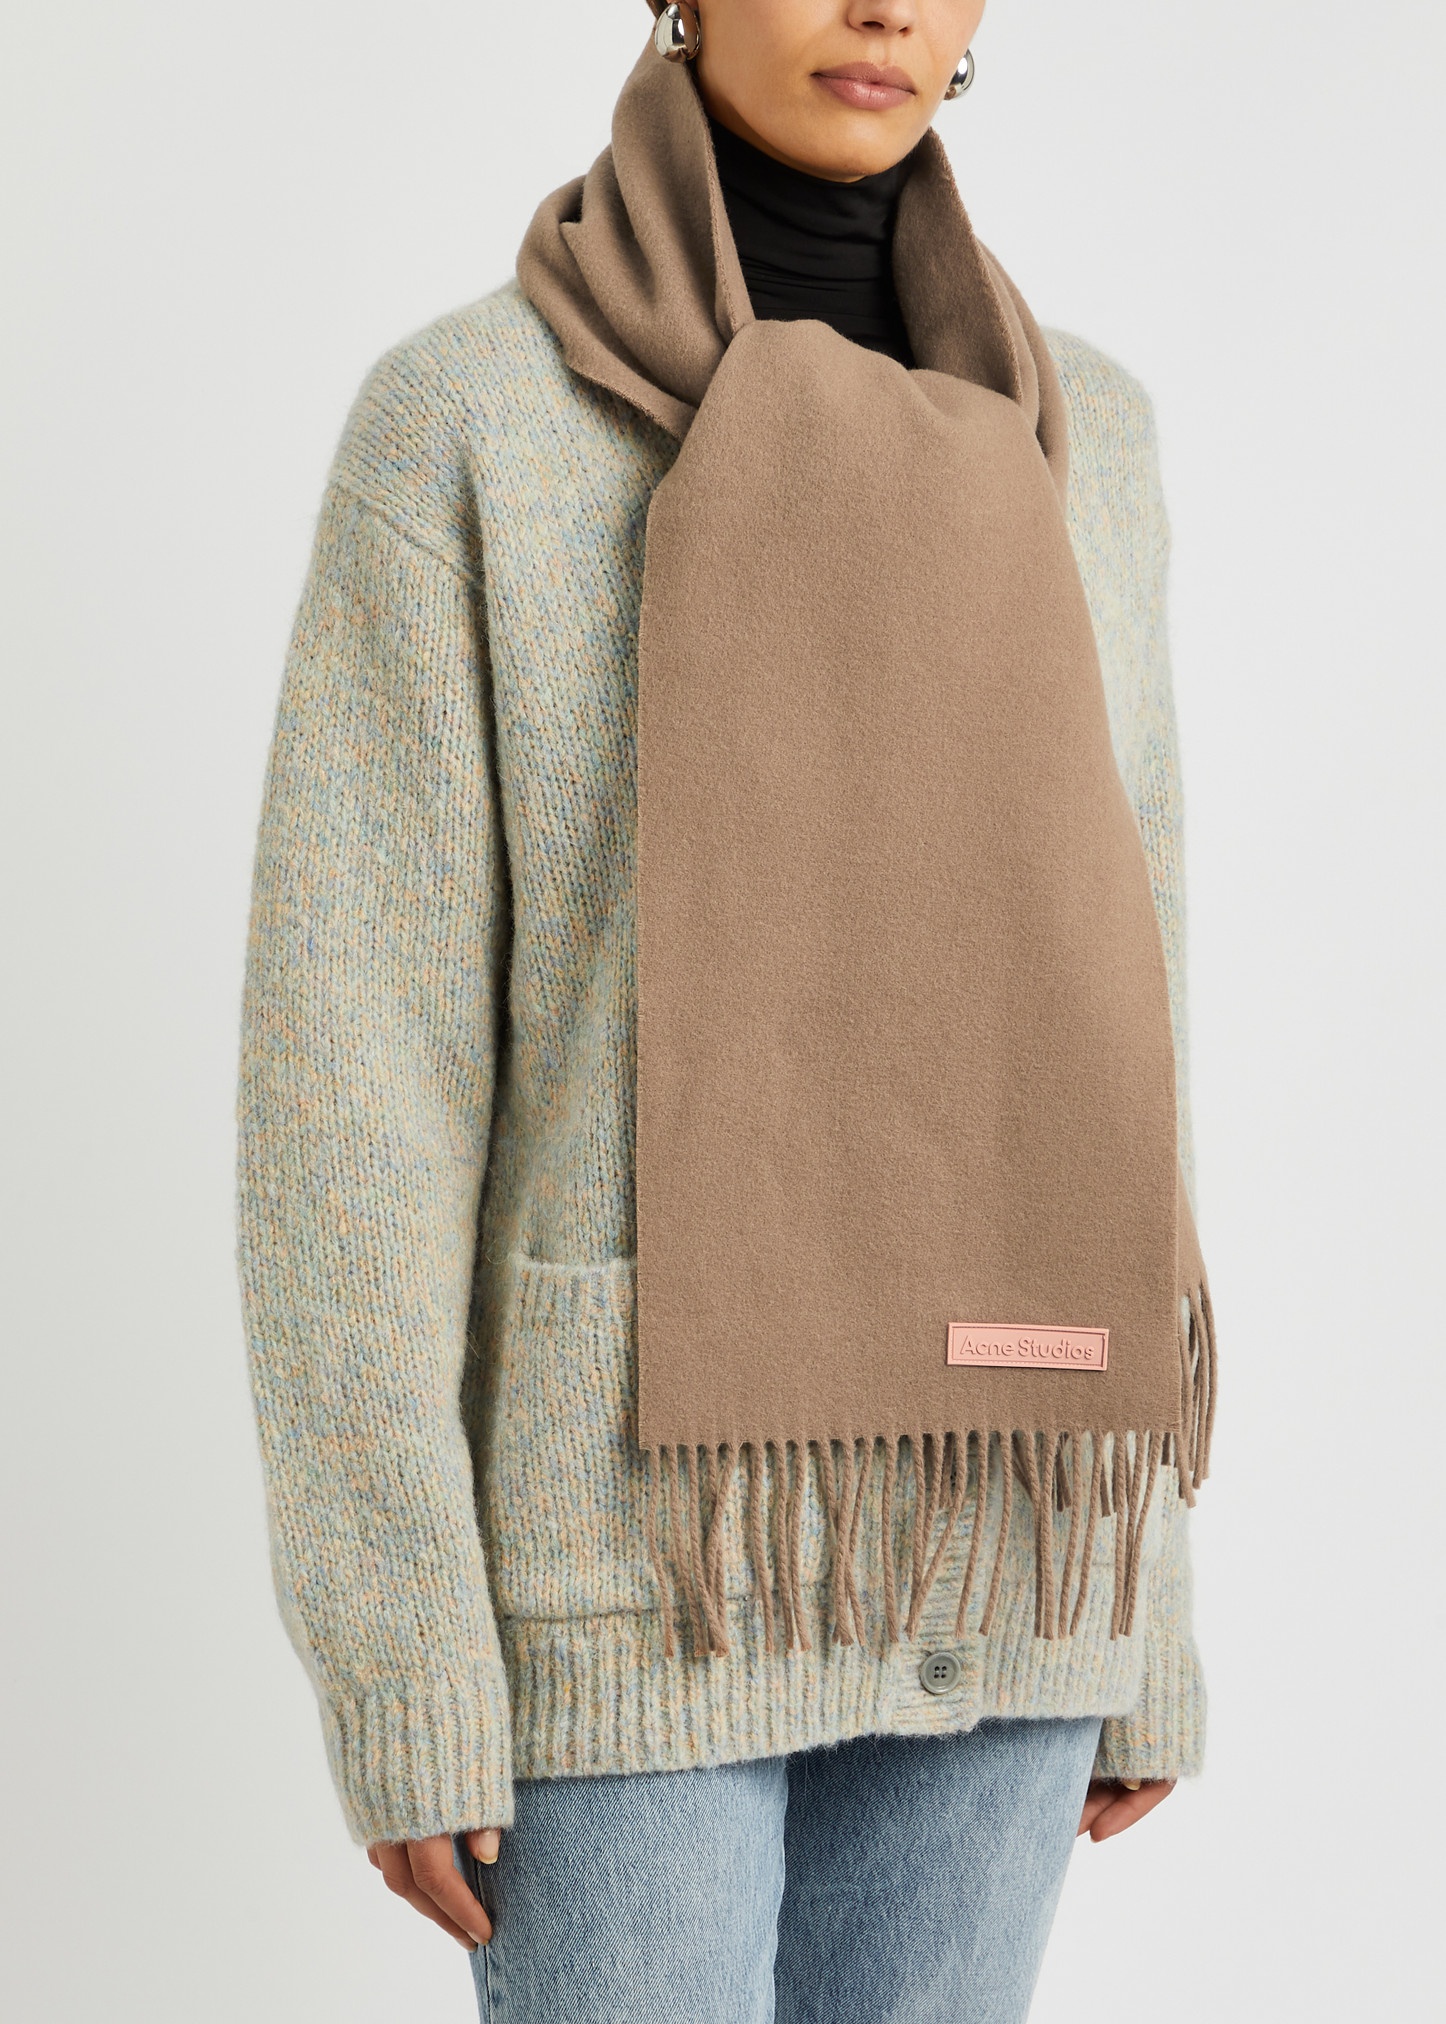 Vesta wool scarf - 2